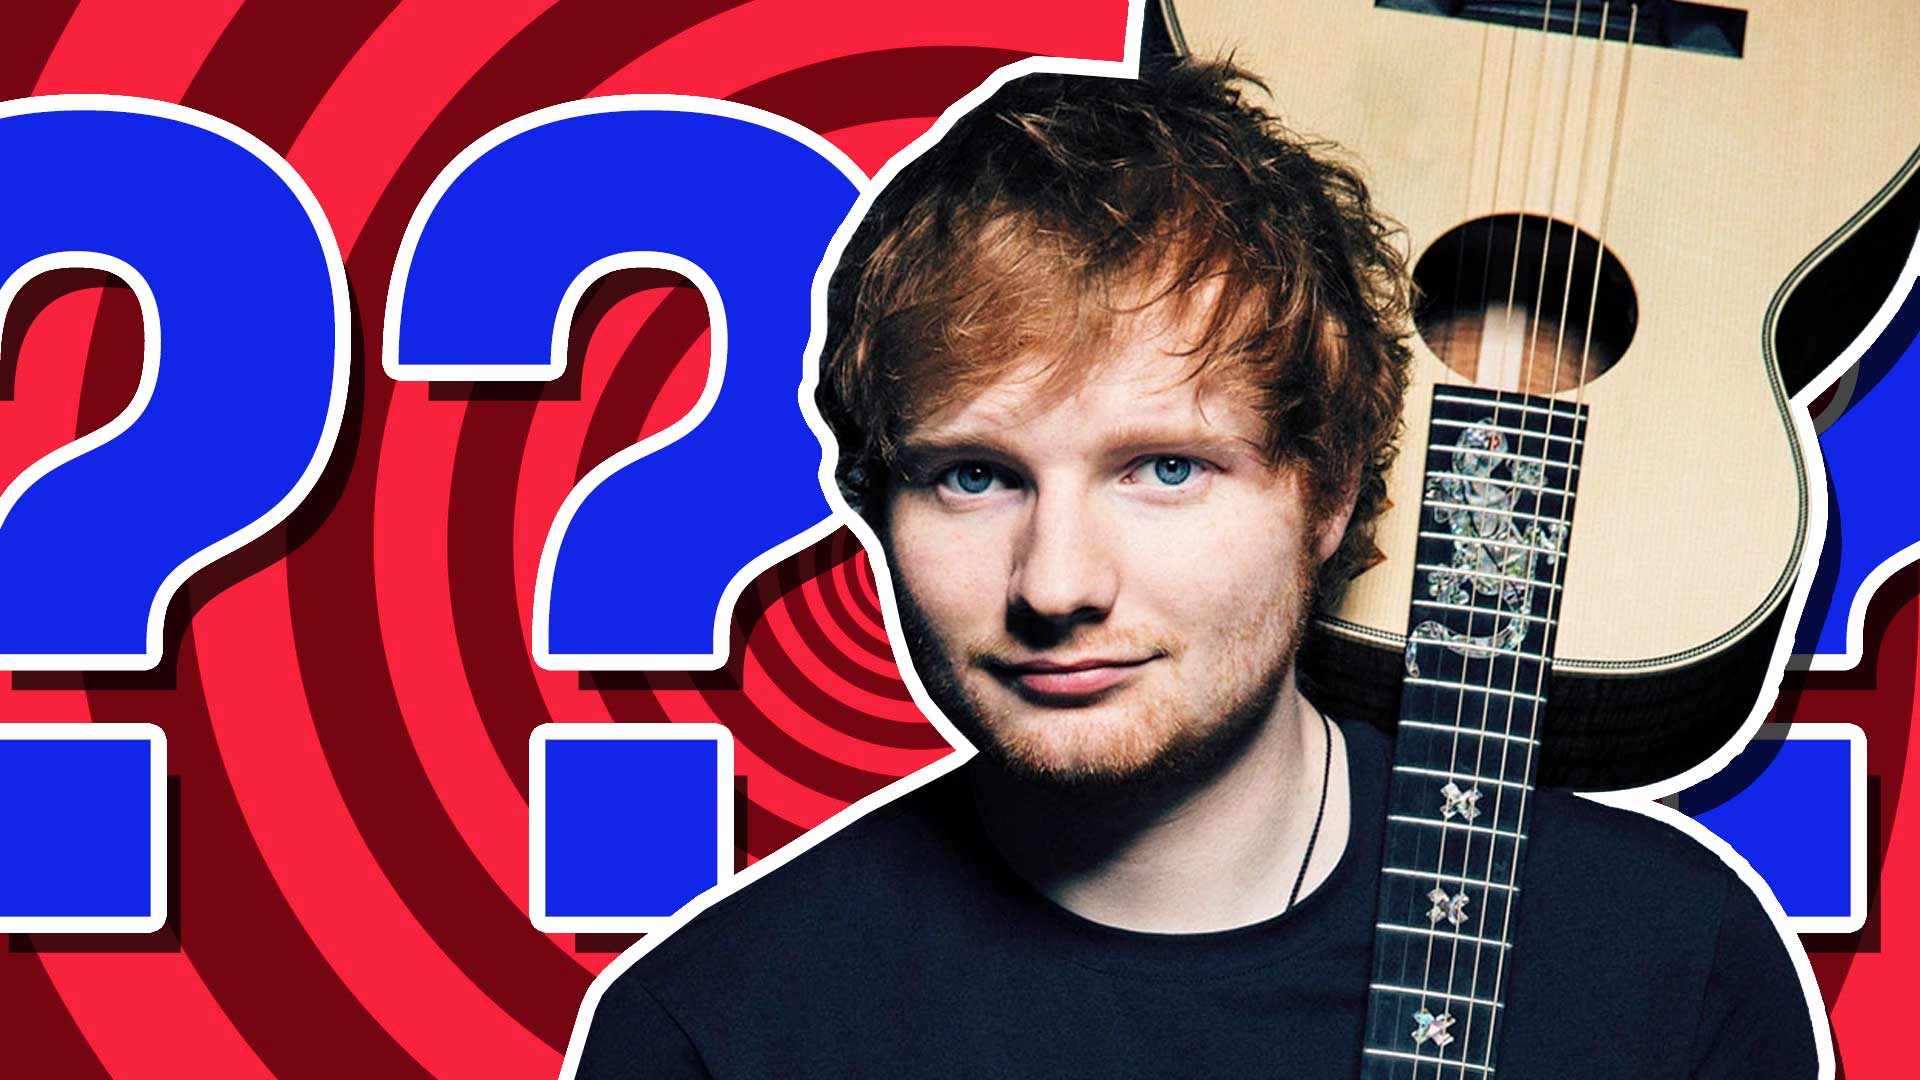 Ed Sheeran song personality quiz